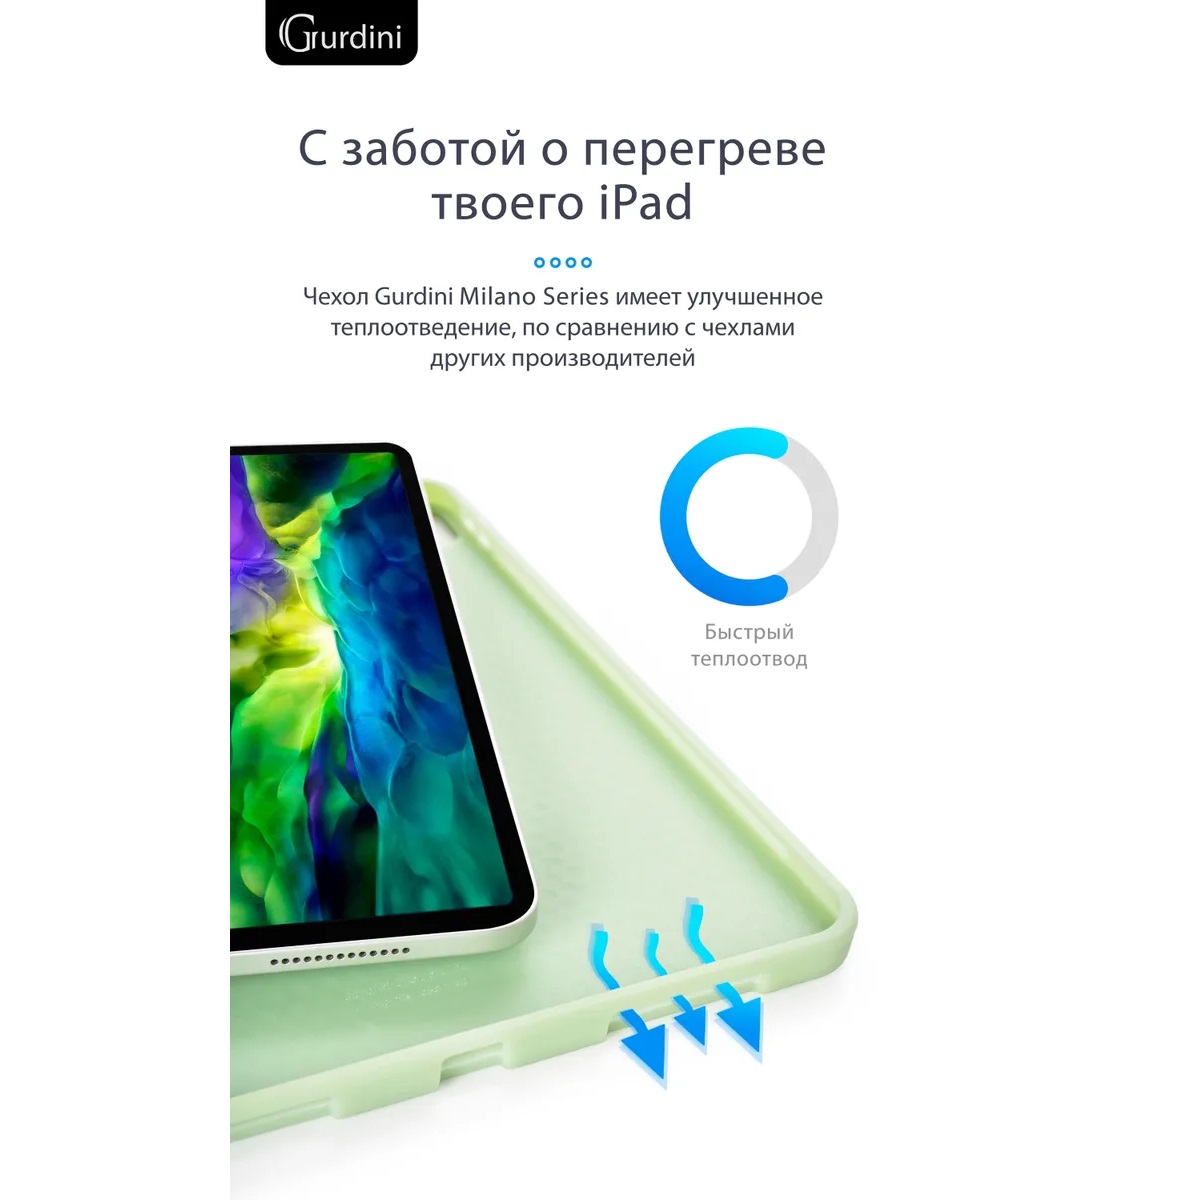 Чехол-книжка Gurdini Milano Series (pen slot) для iPad Air 10.9 Green